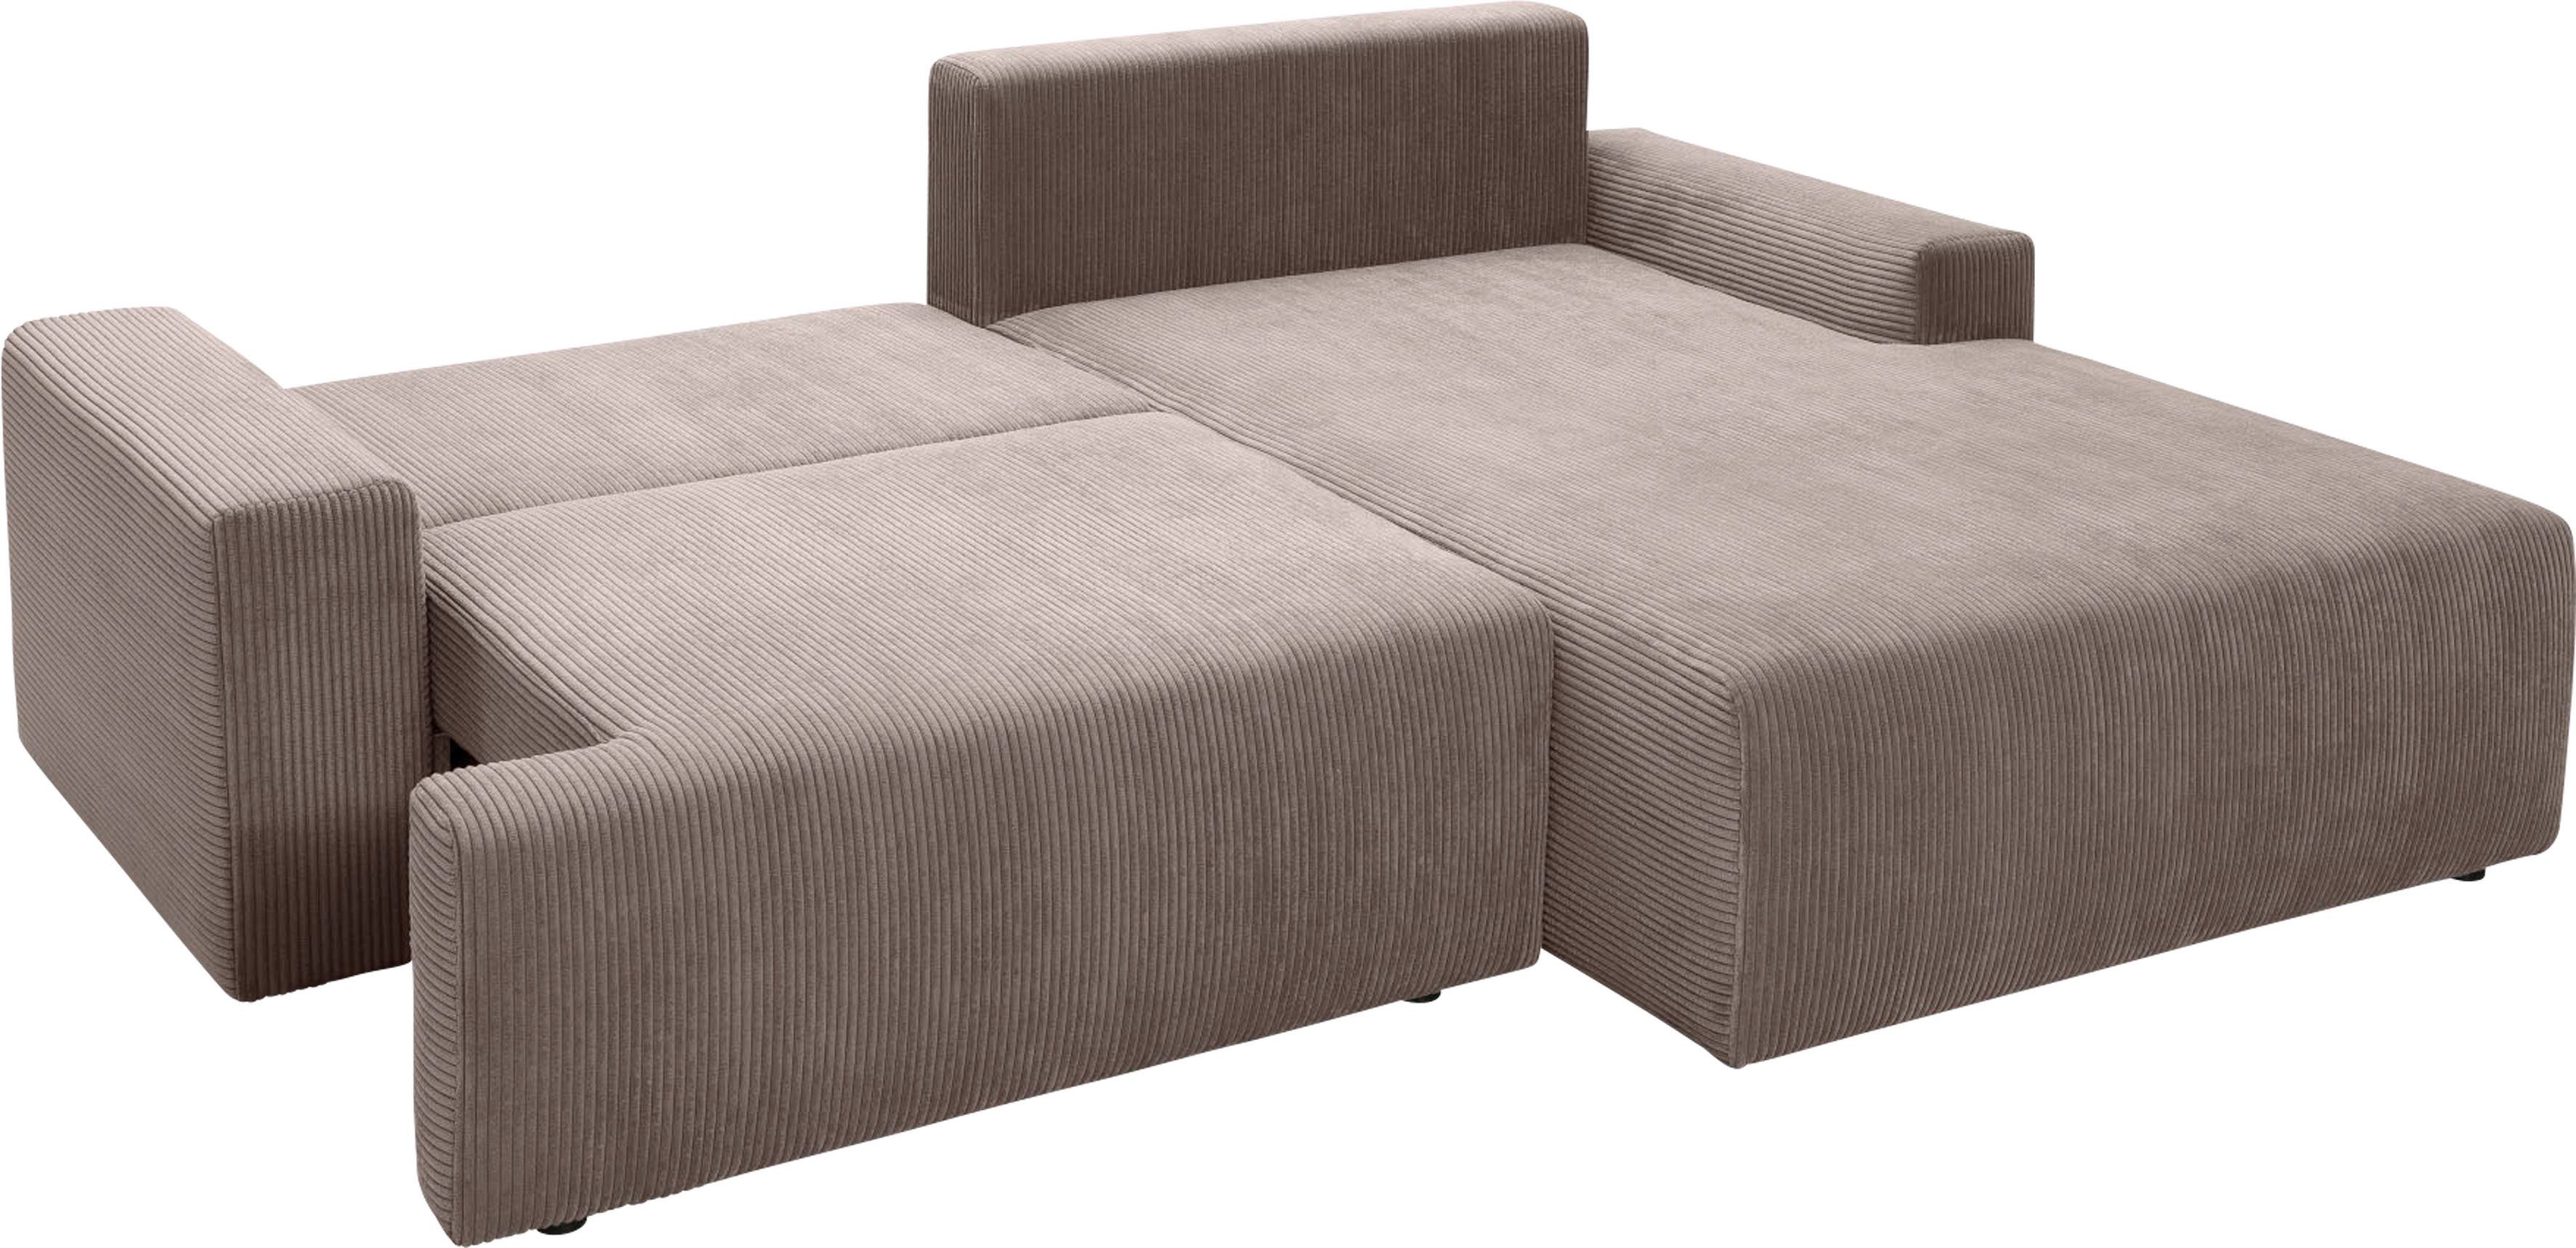 exxpo - sofa fashion Orinoko, inklusive und cappuccino Ecksofa verschiedenen Bettkasten Cord-Farben Bettfunktion in